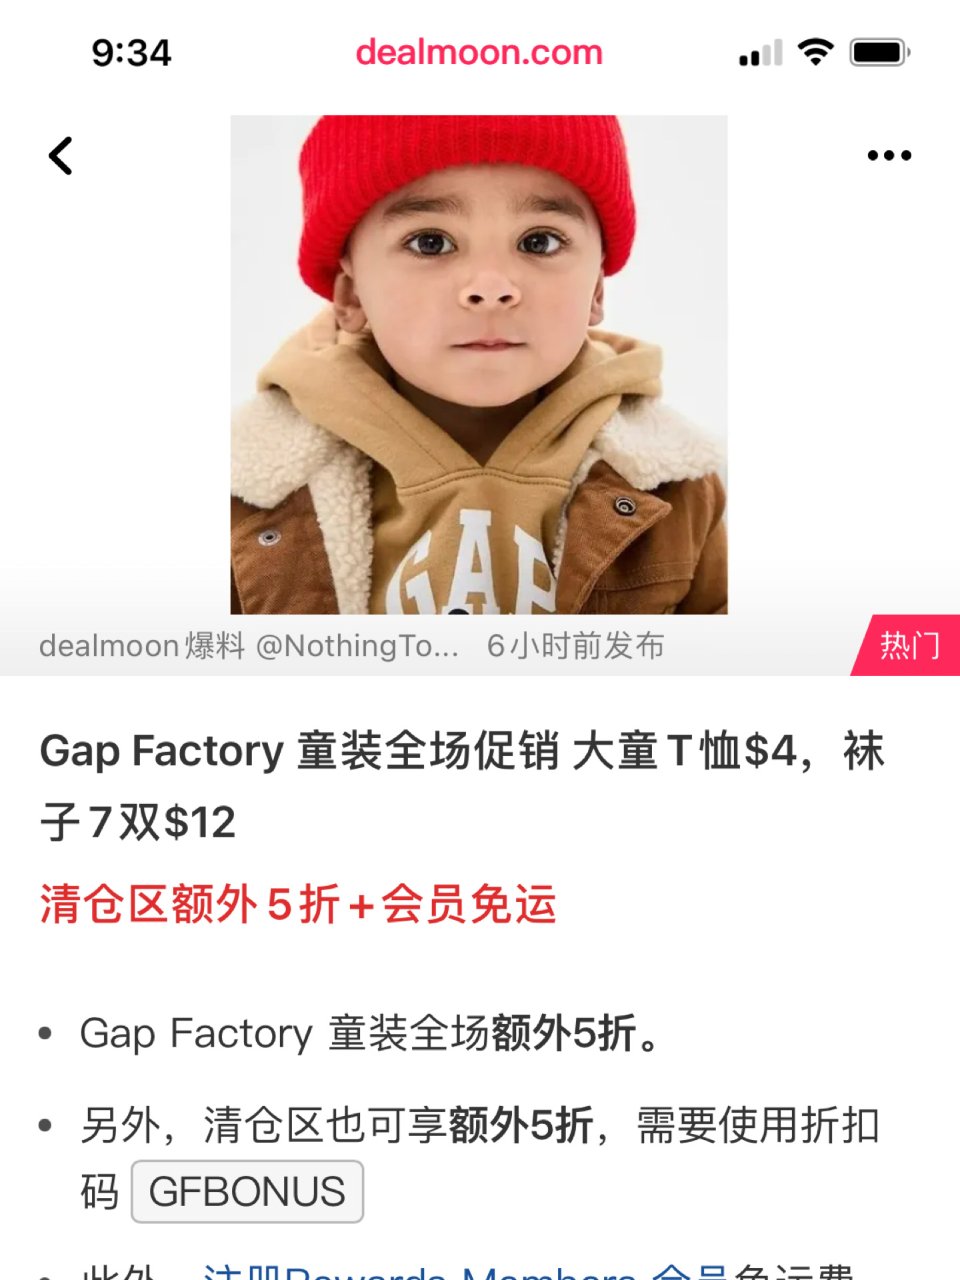 Gap factory 